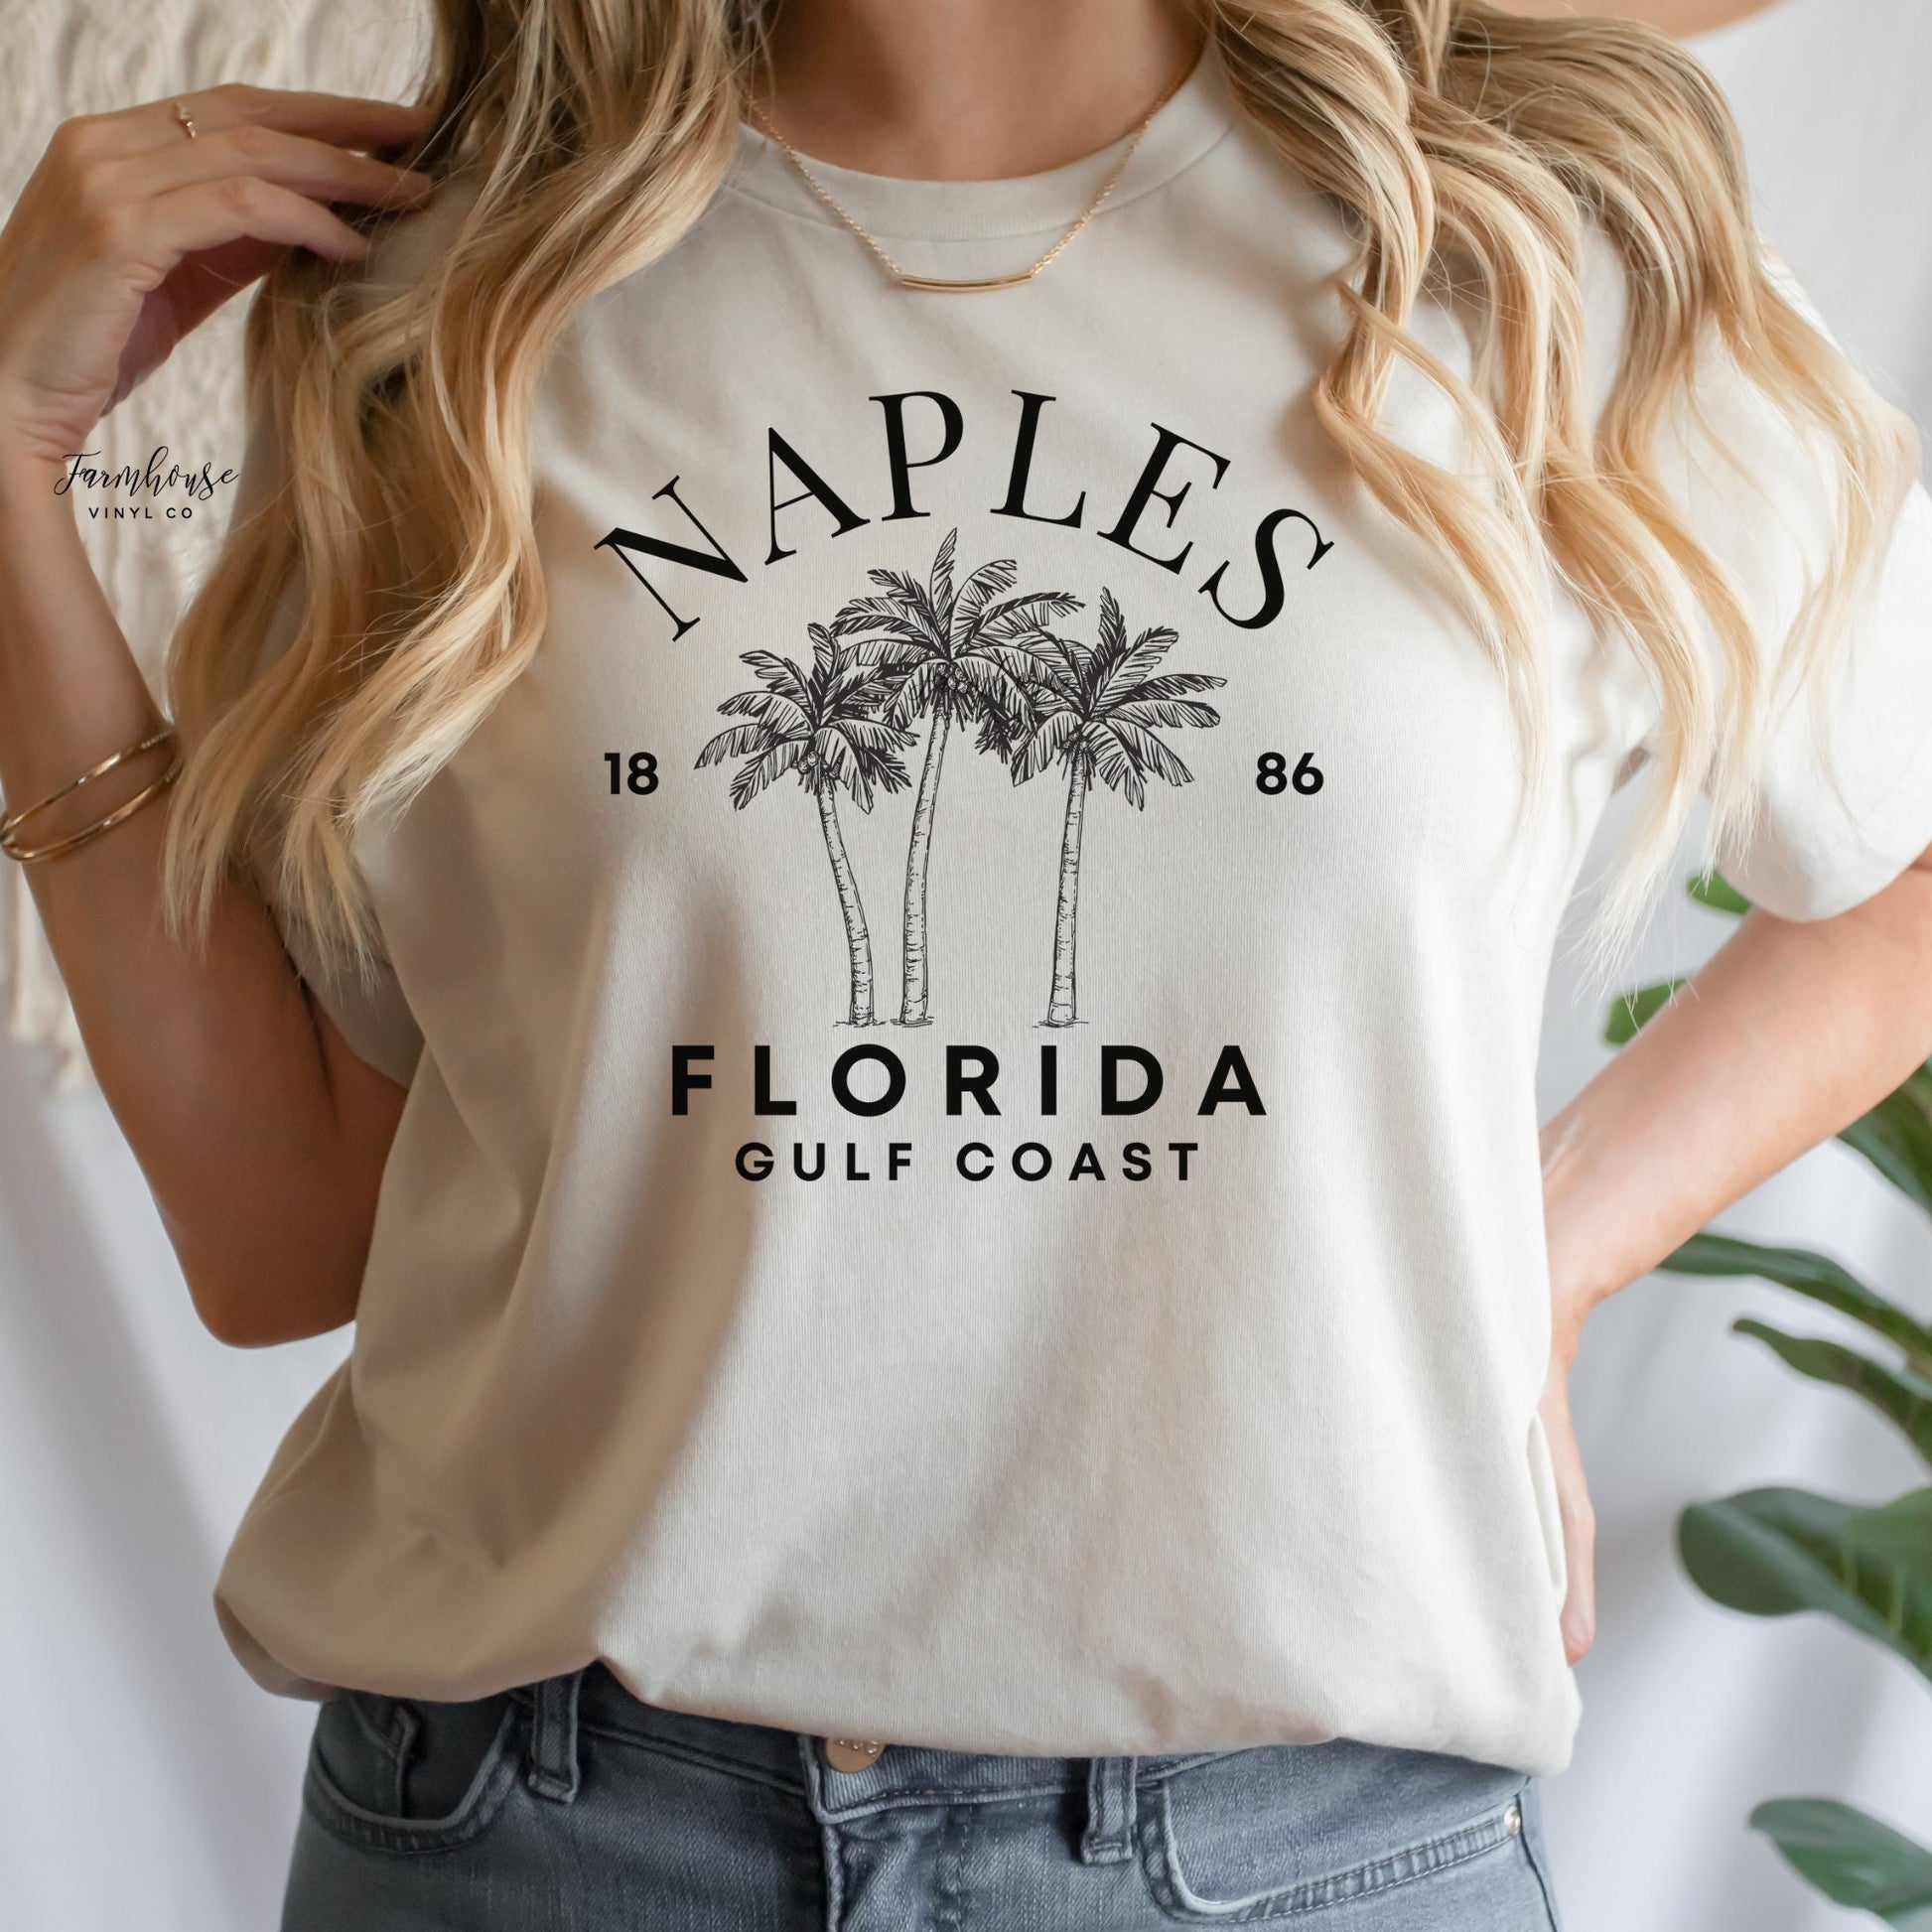 Naples Florida Palm Trees Shirt - Farmhouse Vinyl Co